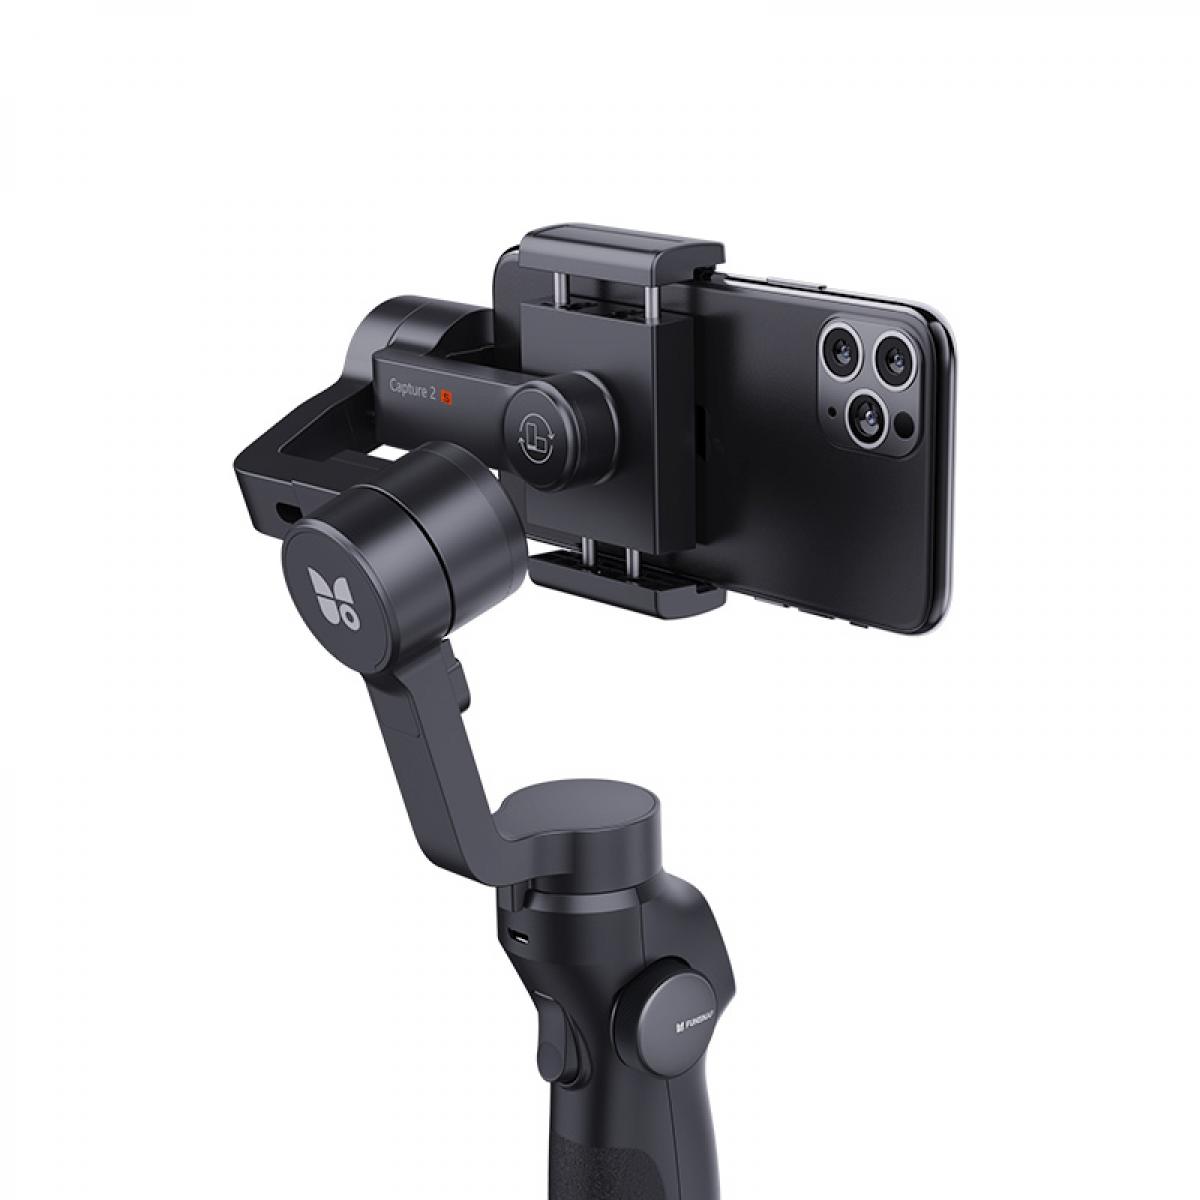 Estabilizador de cardán de 3 ejes para GoPro Hero 11/10/9, estabilizador de  mano para GoPro para grabación de video, IPX4 impermeable, control